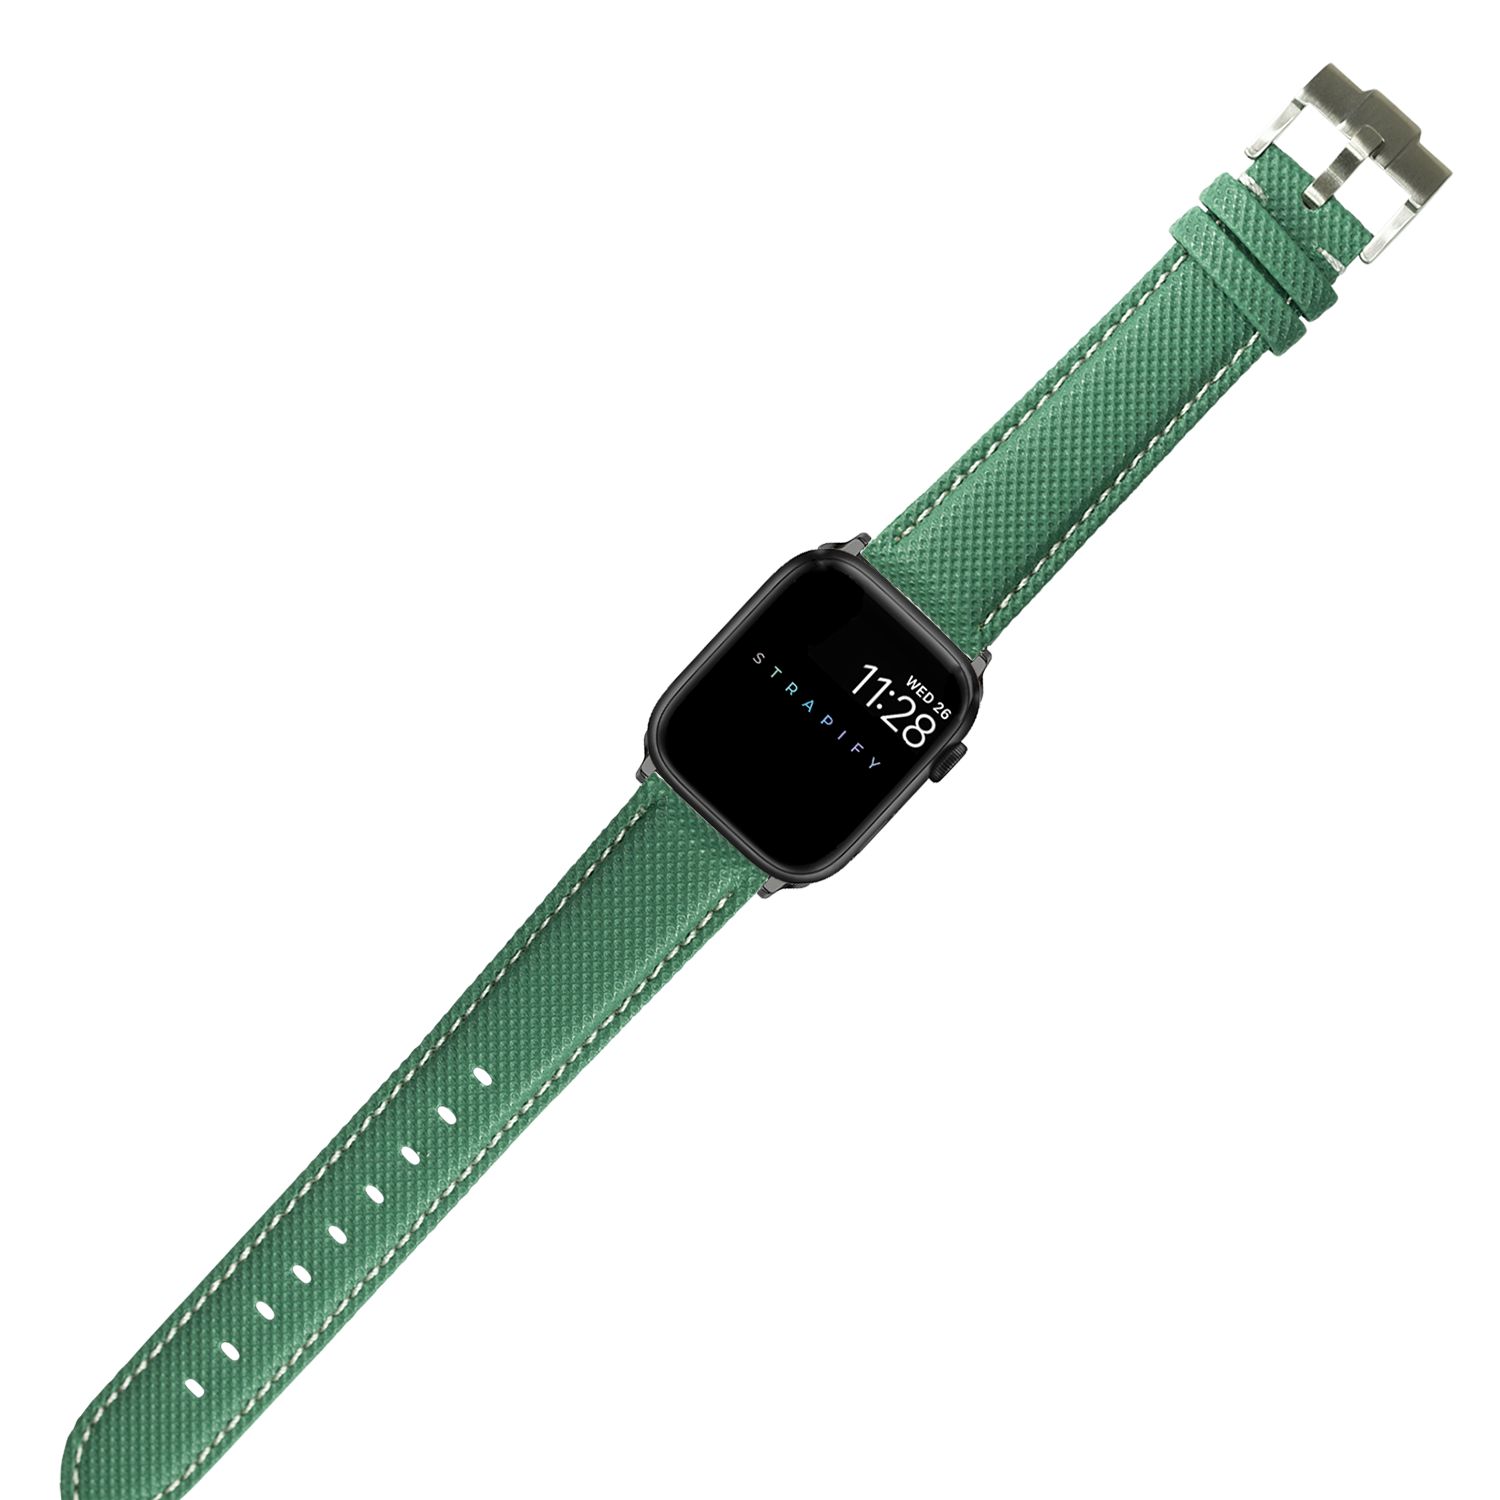 [Apple Watch] Sailcloth - Emerald Green | White Stitching